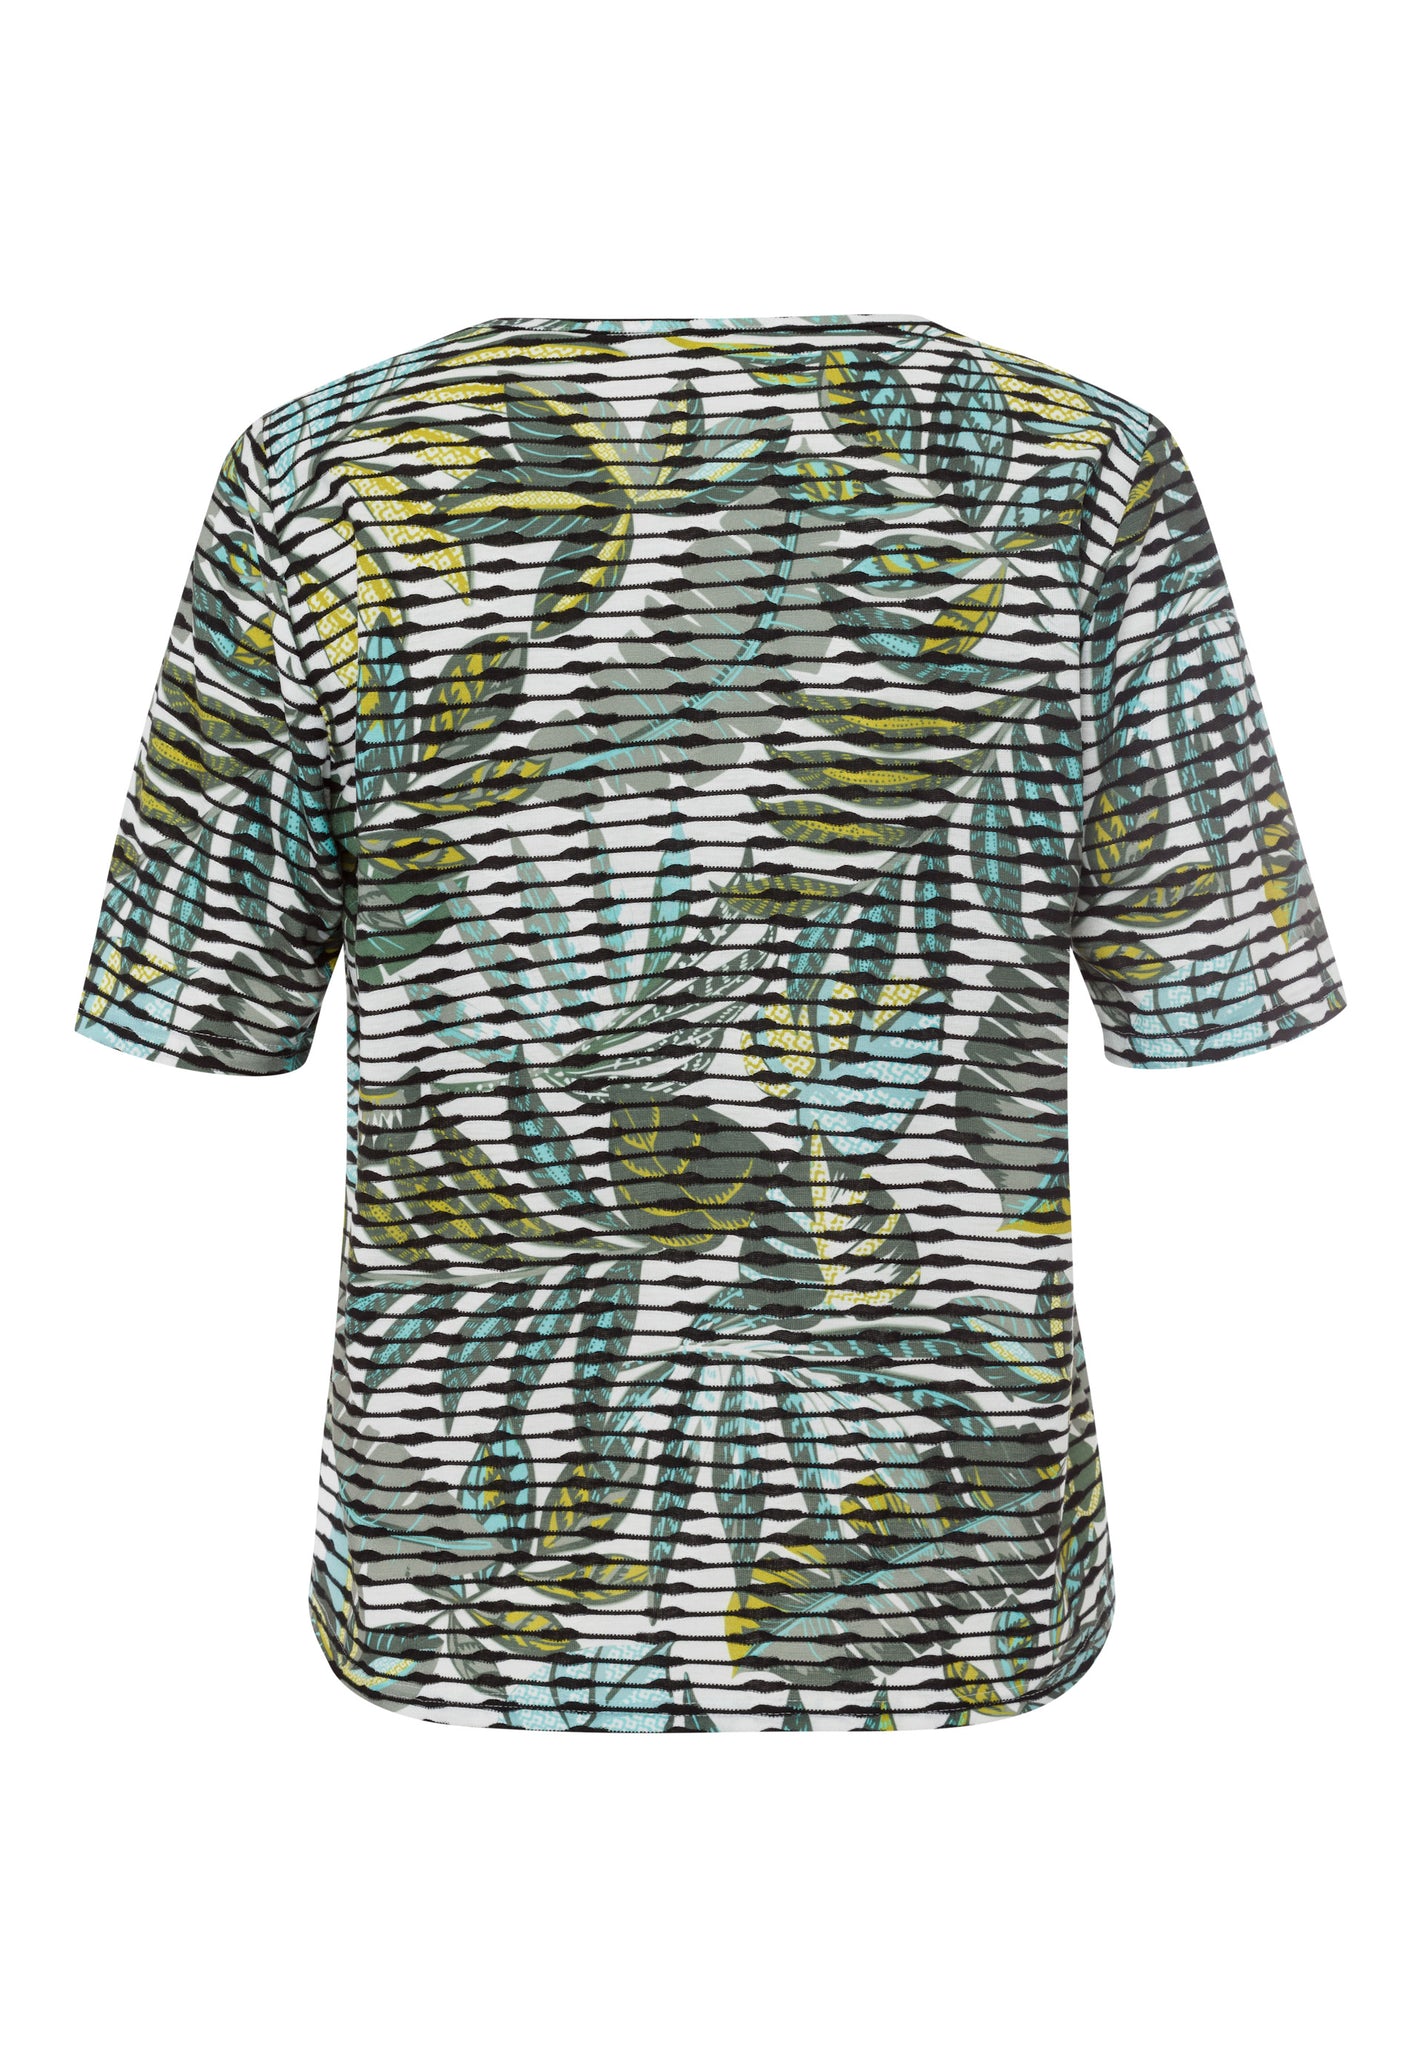 Frank Walder Caribbean Dream collection botanical print and stripe tshirt in khaki

Product code 203.406 